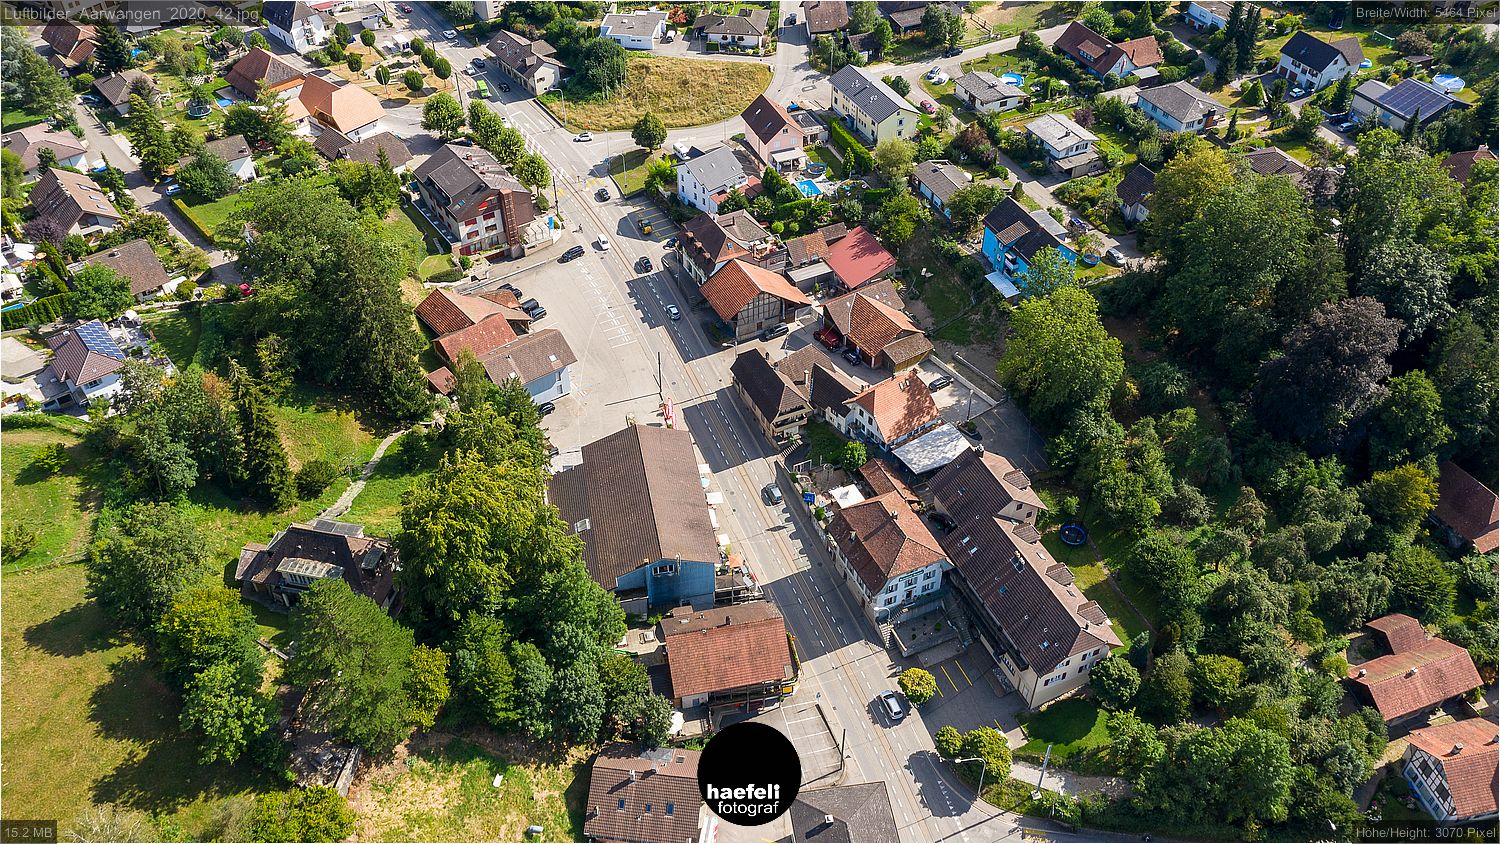 Luftbilder_Aarwangen_2020_42.jpg